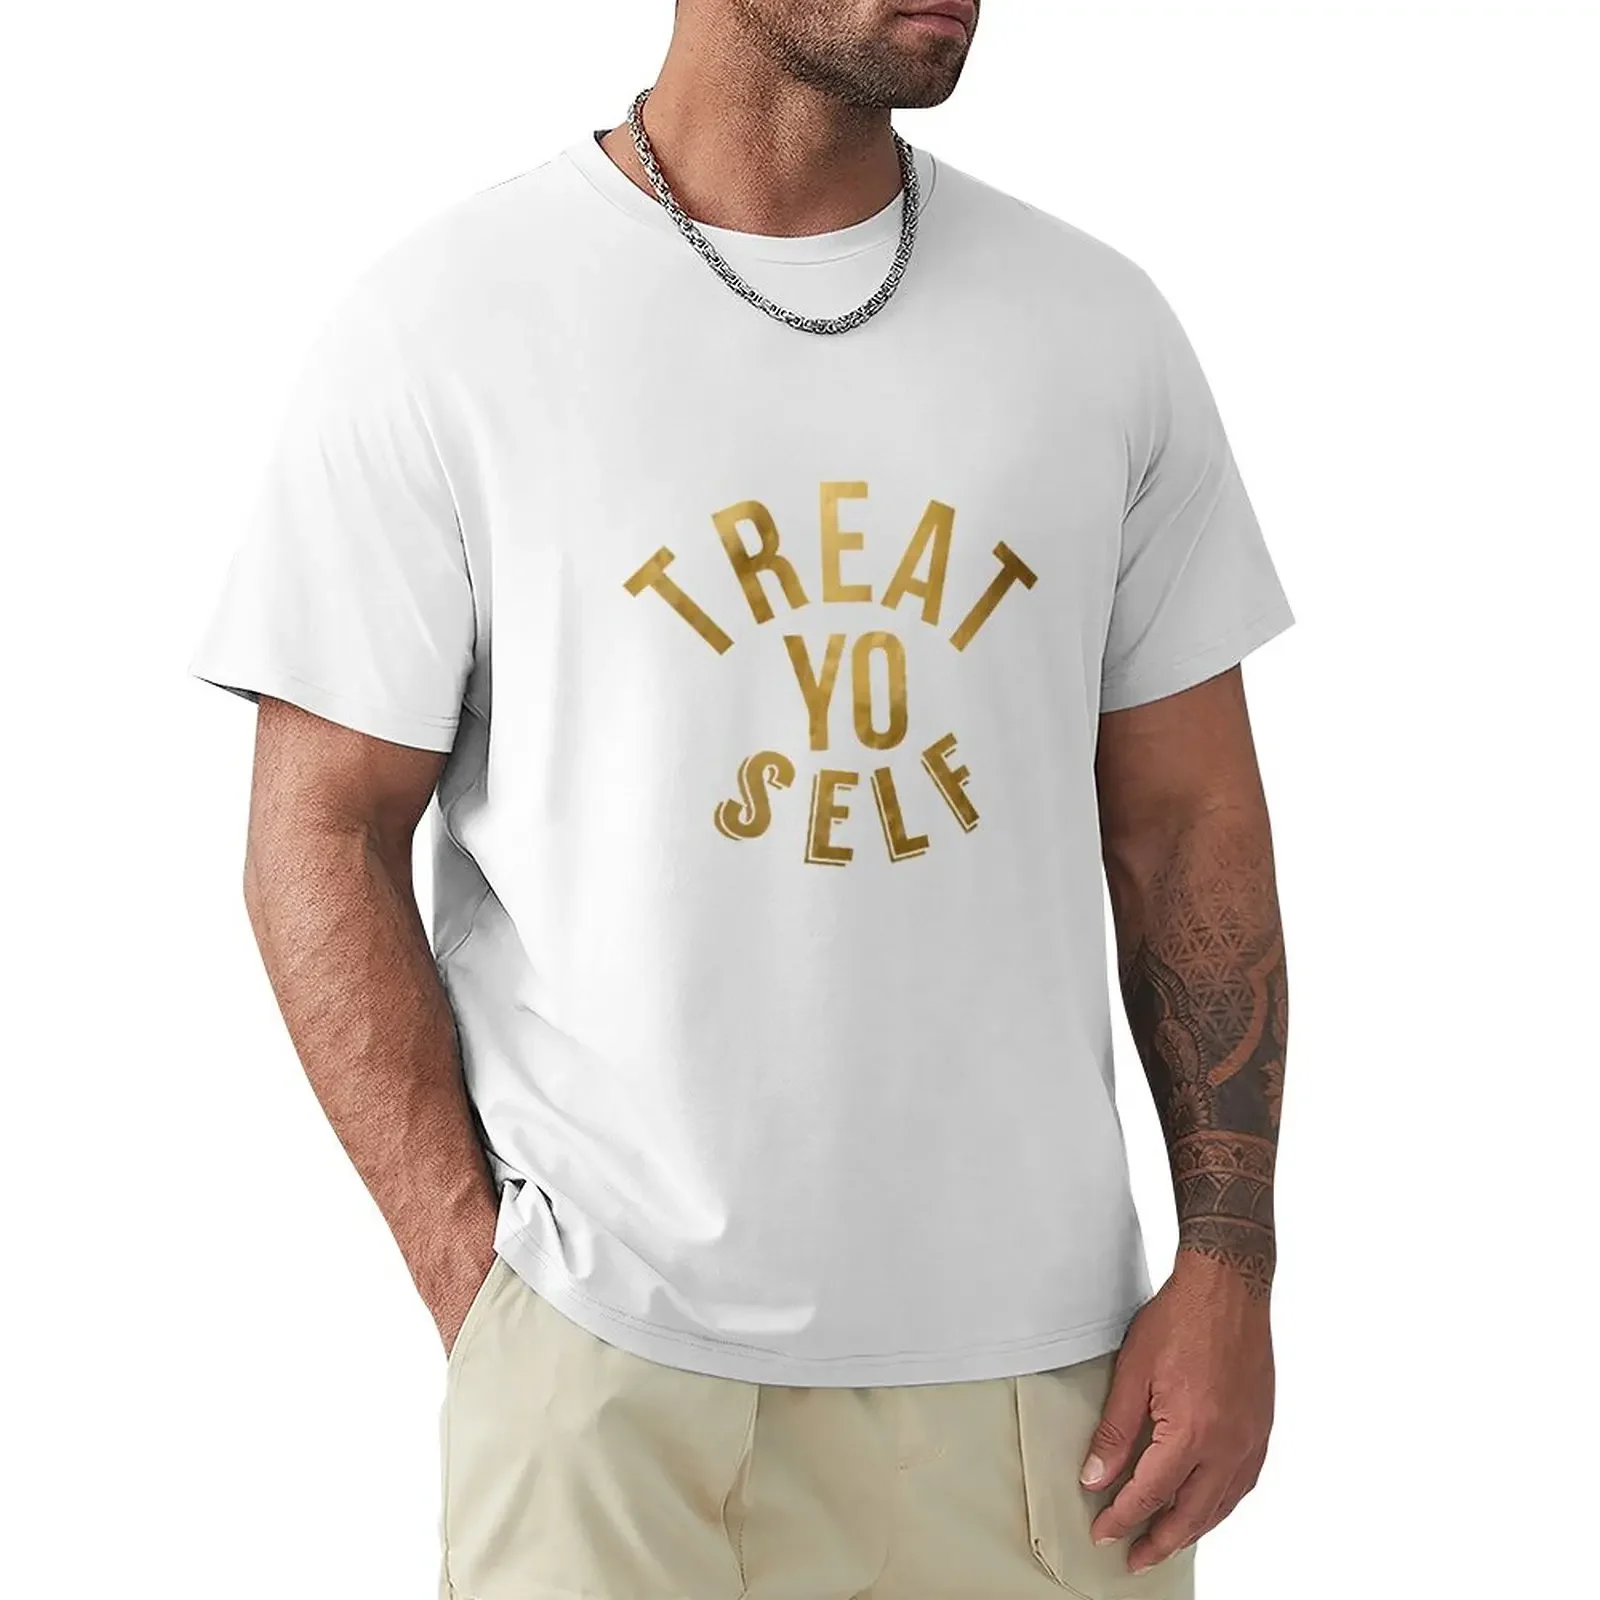 

Treat Yo Self Parks and Rec T-Shirt quick drying blacks customs mens champion t shirts